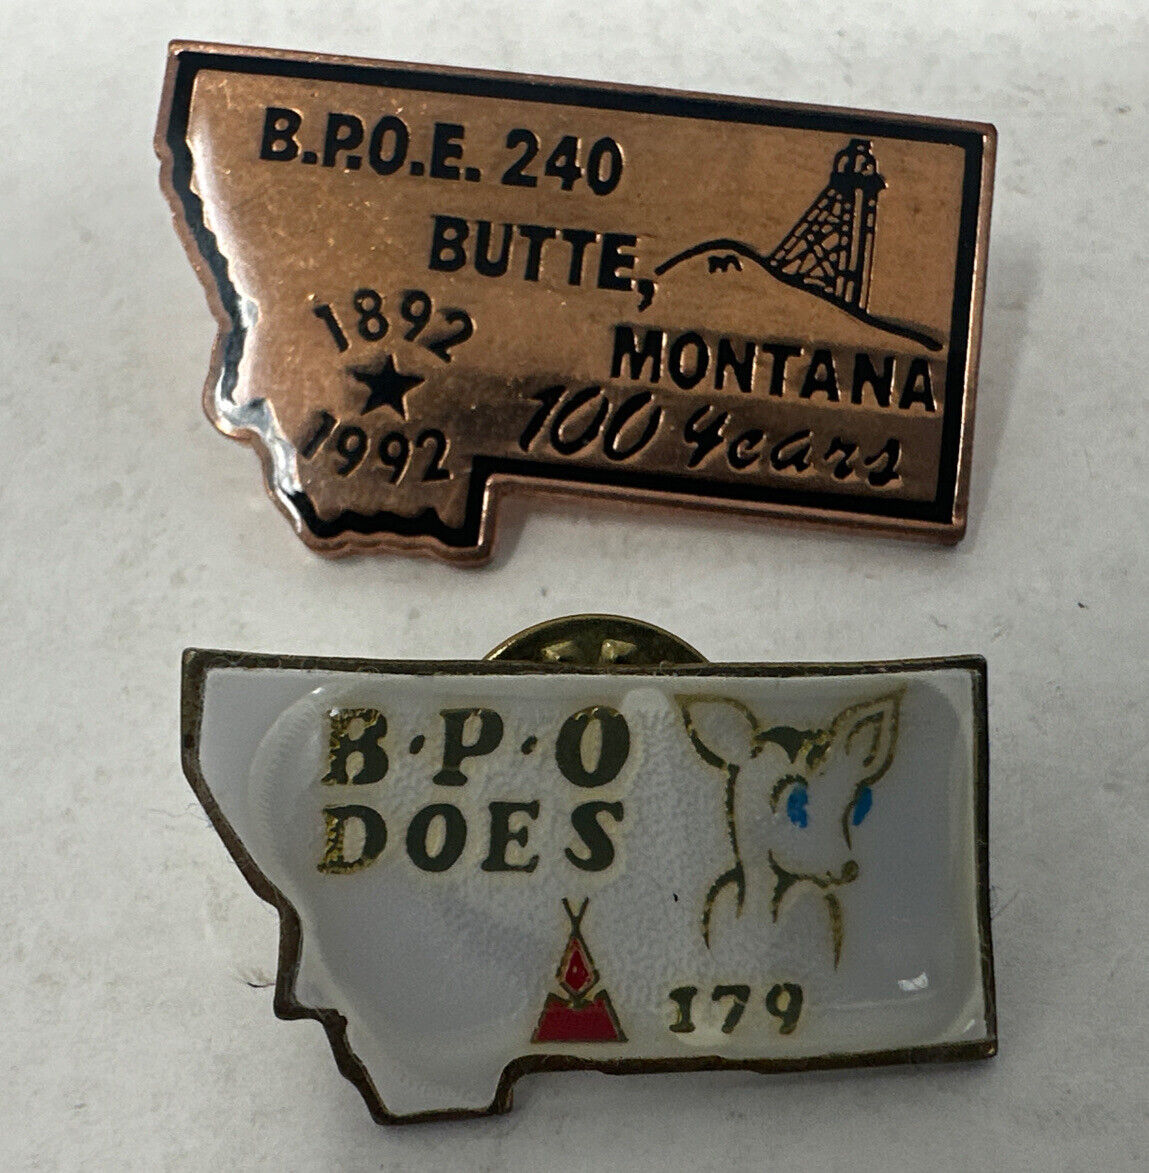 BPOE Elks 240 & BPO Does 179 Pin Back Buttons Vintage Butte Montana 1992